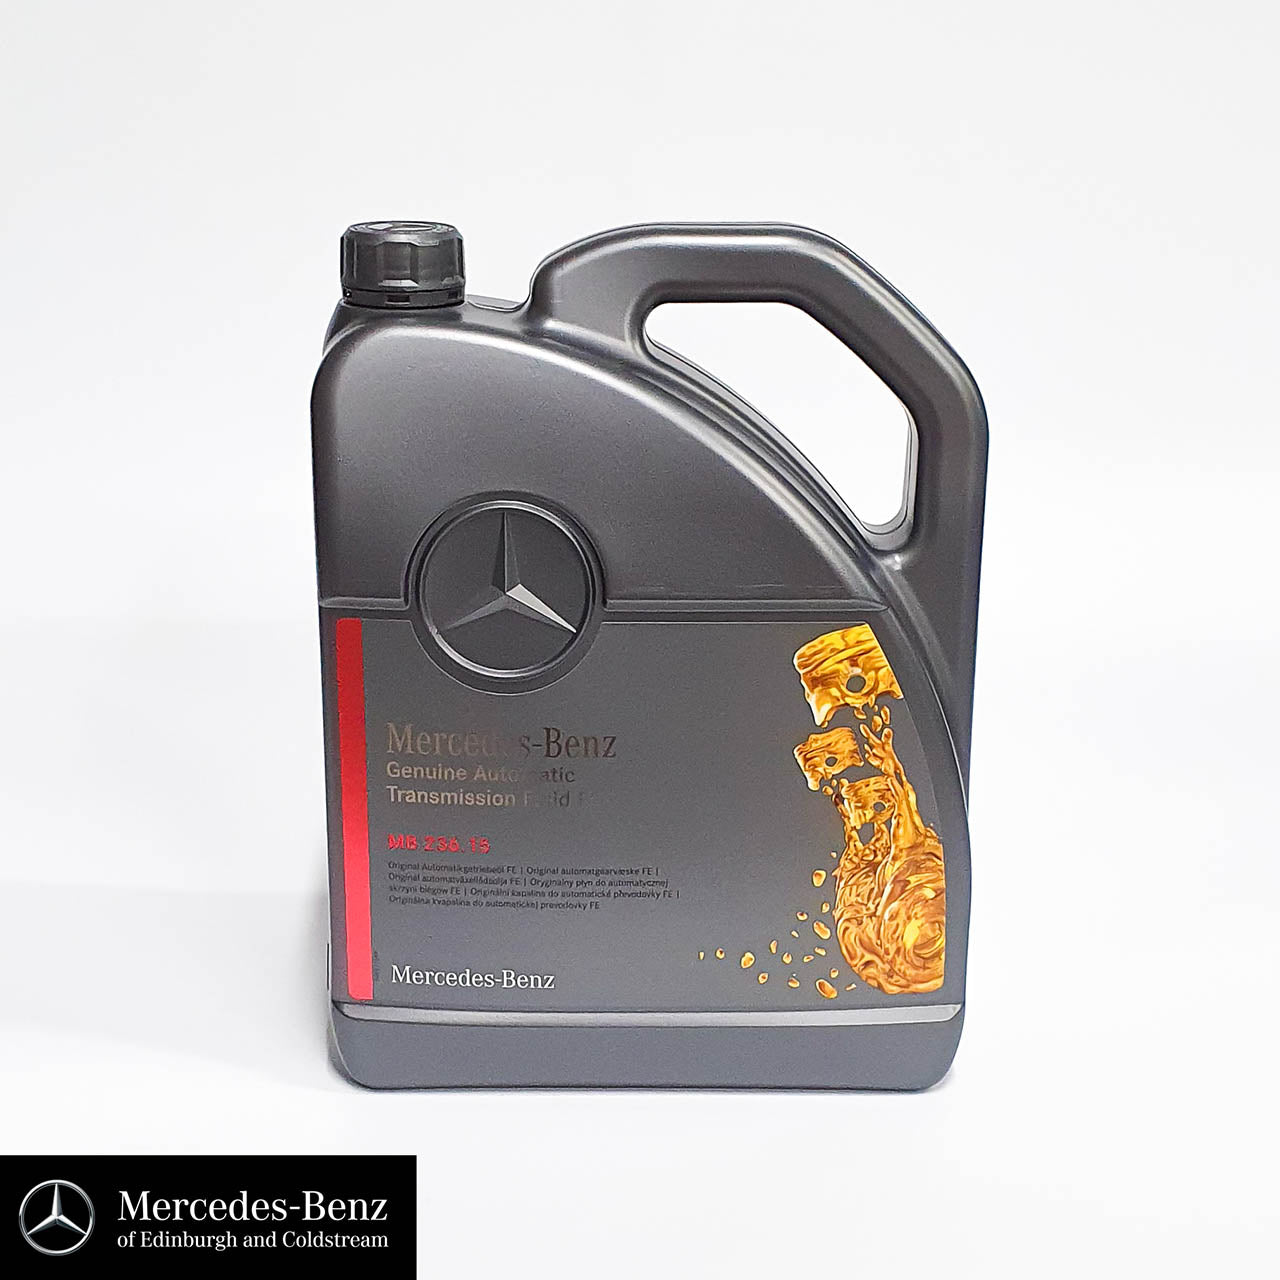 Genuine Mercedes-Benz gearbox oil 236.15 Blue A89